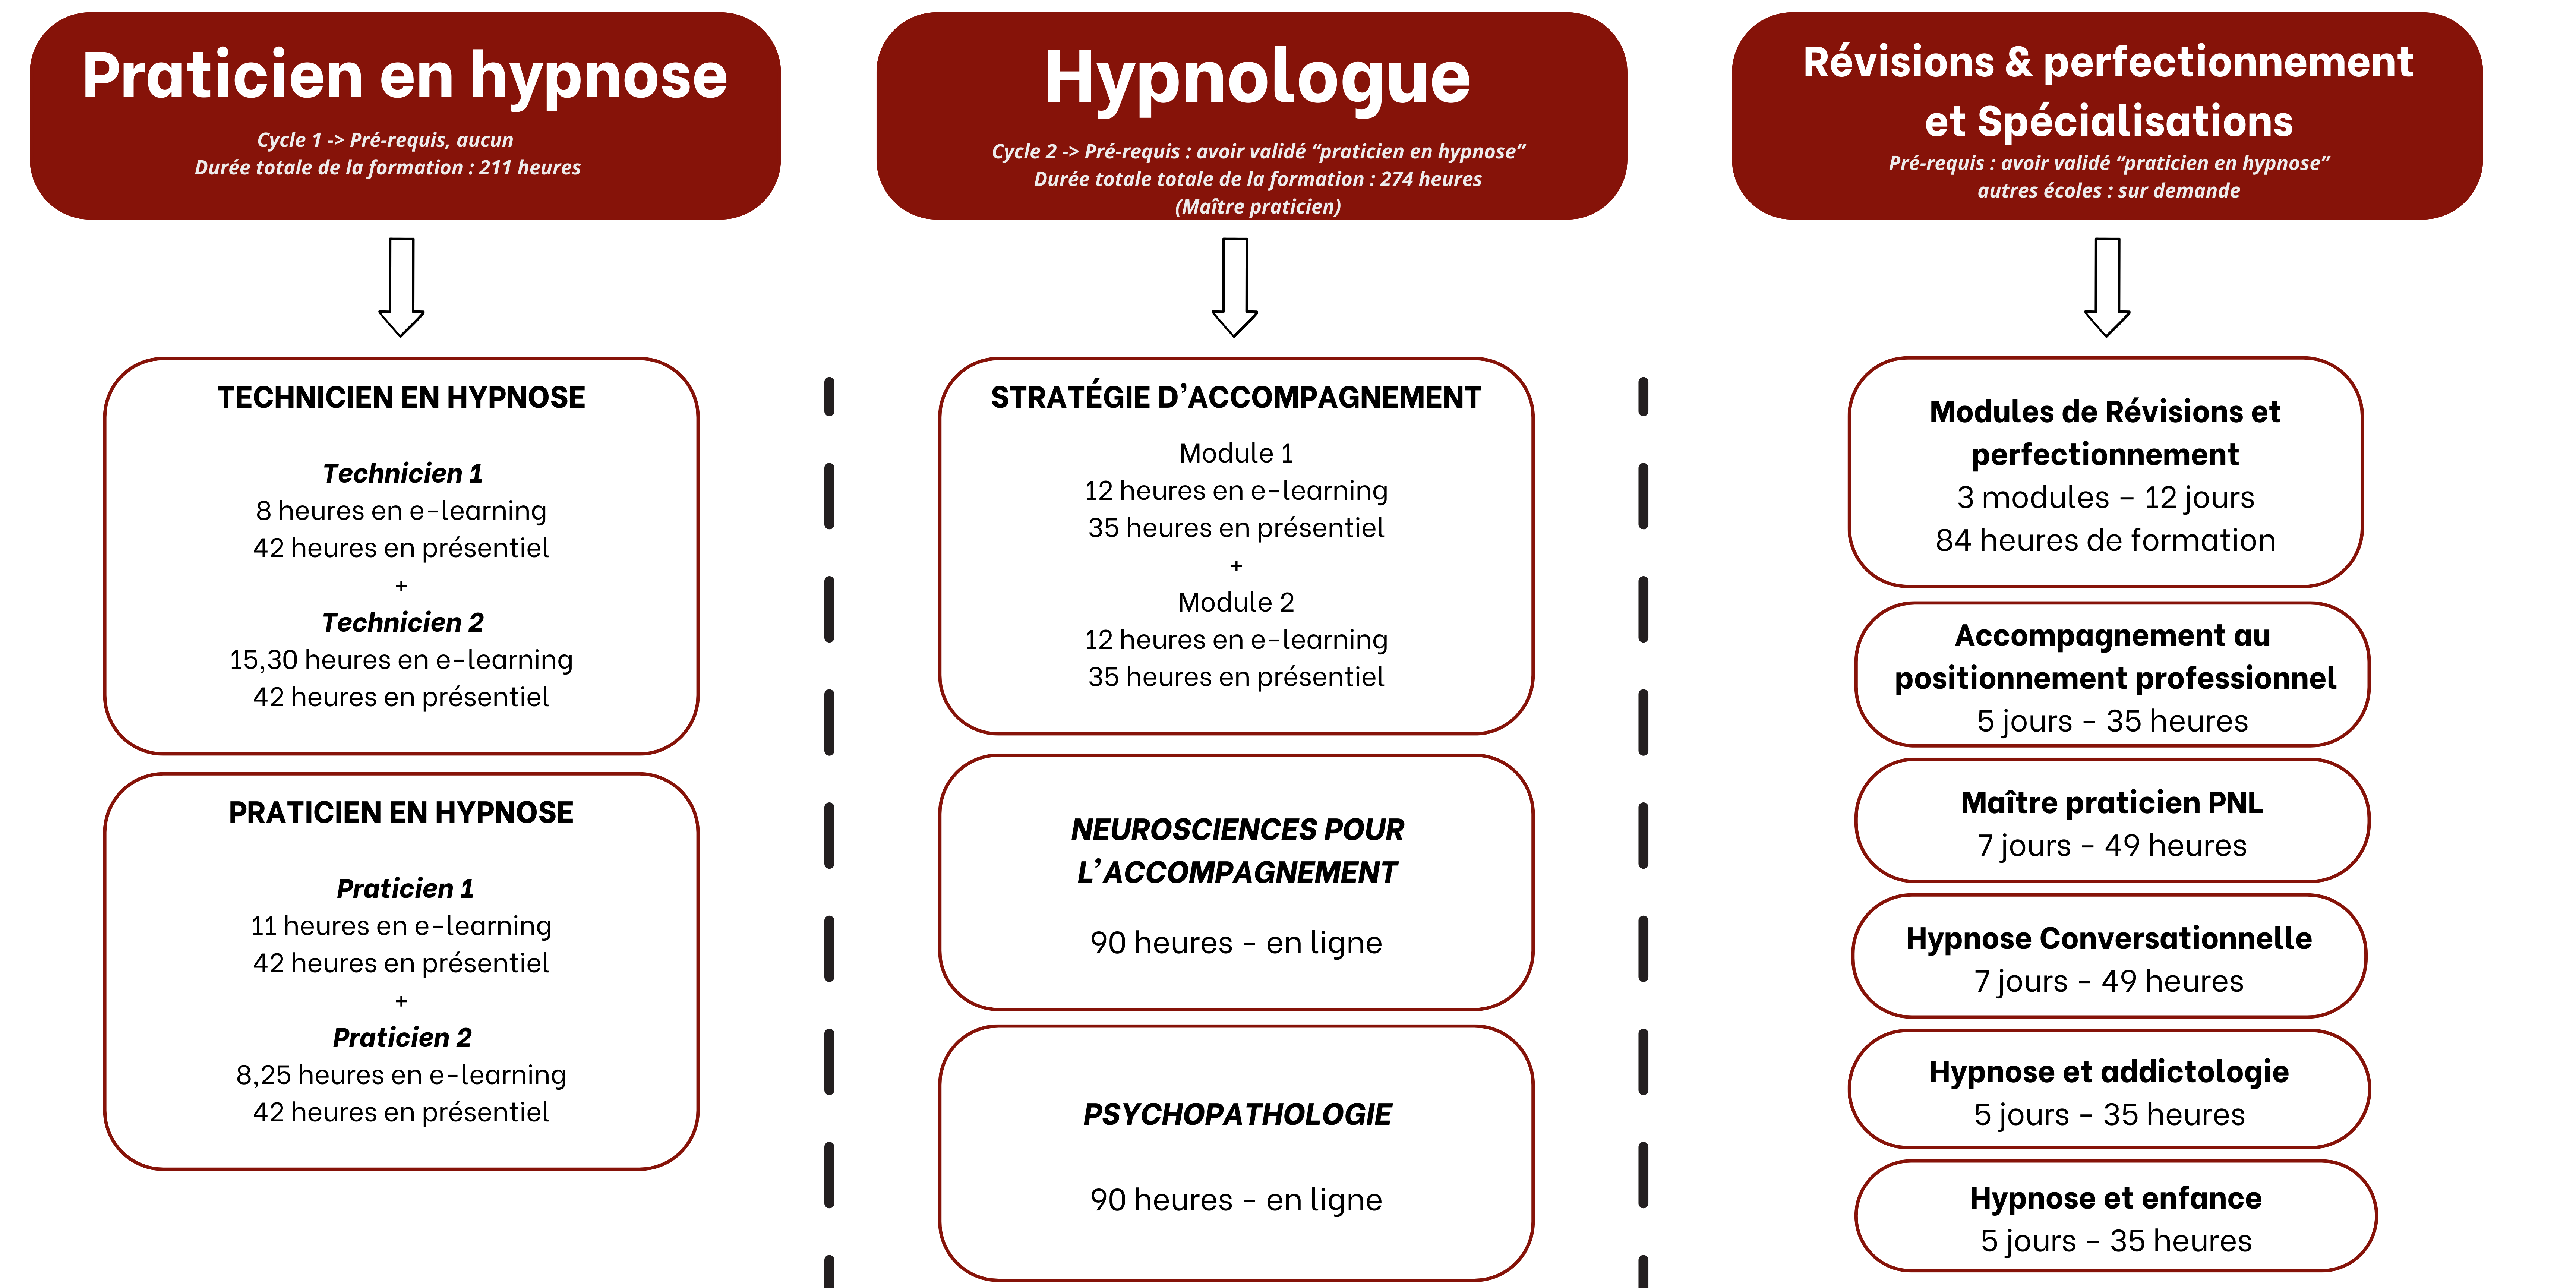 Cycle 1 “Praticien en hypnose”